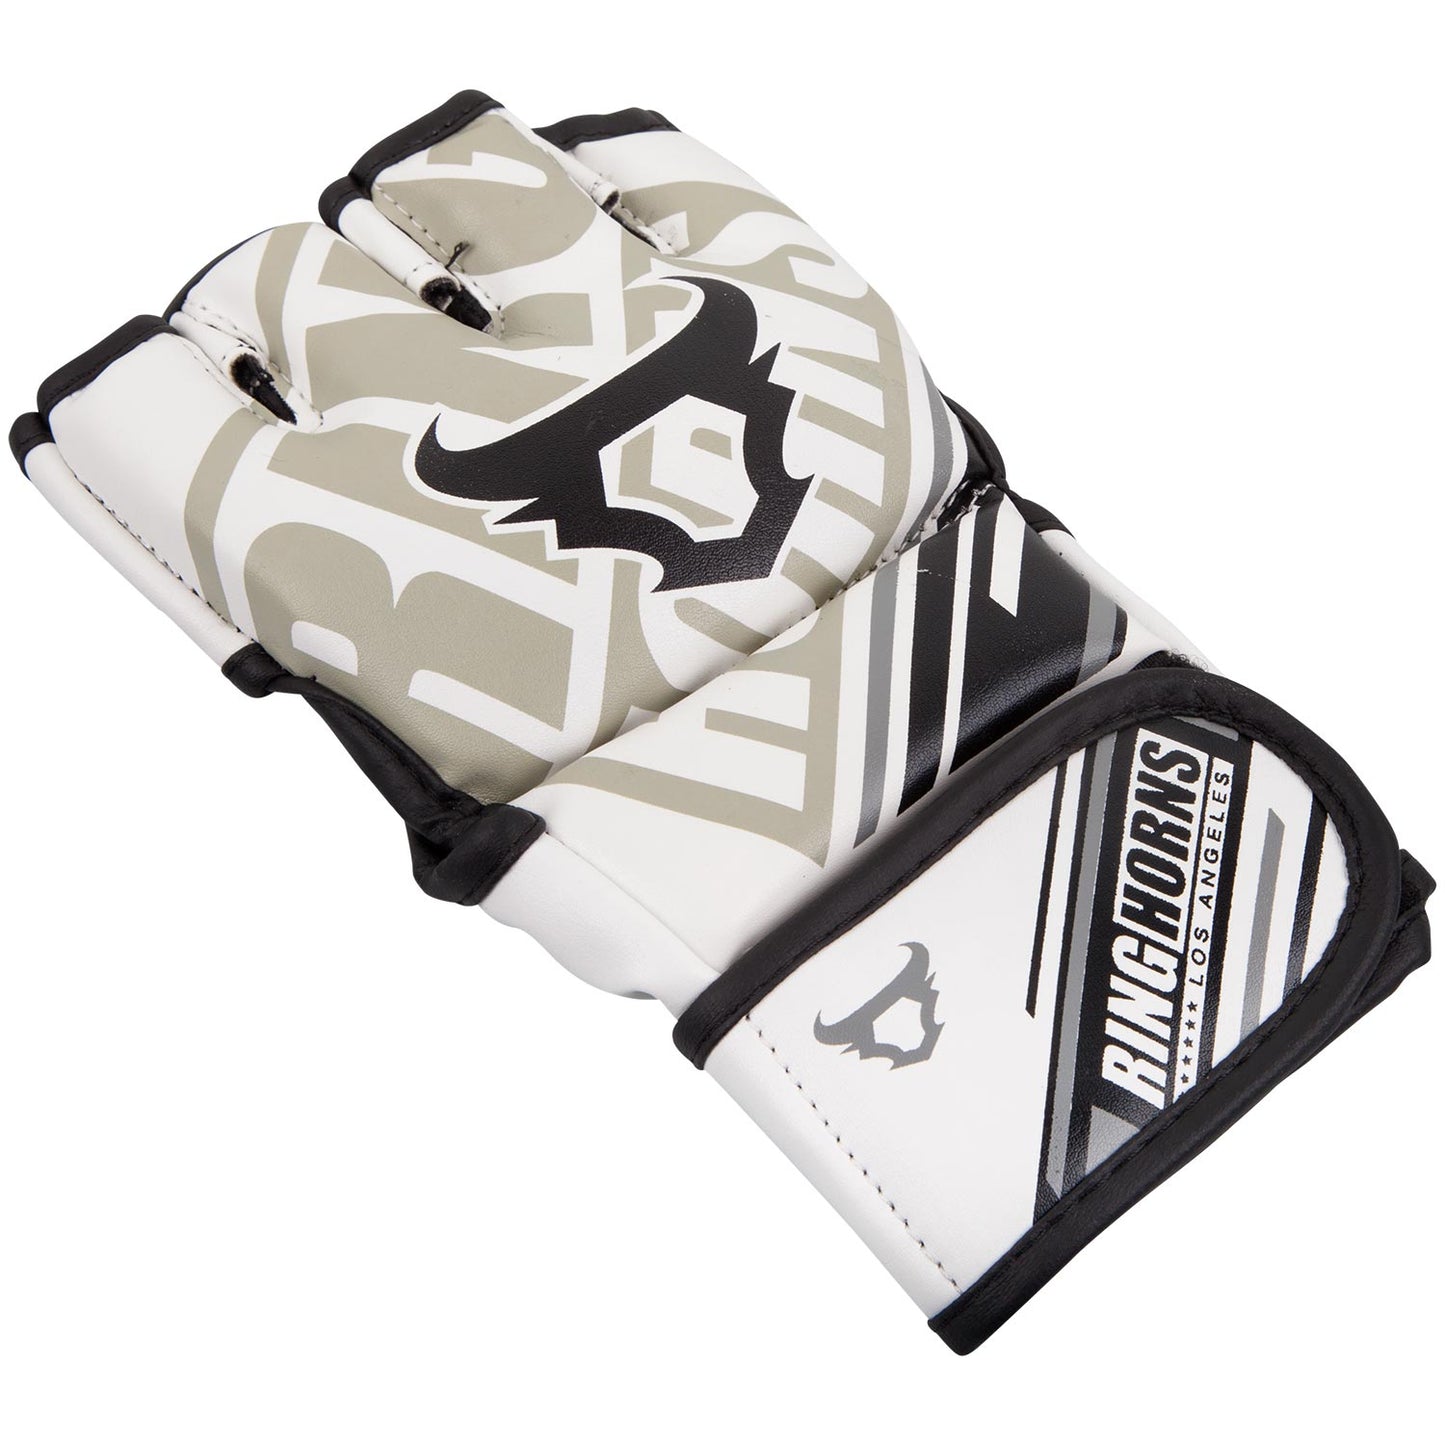 Ringhorns Nitro MMA Gloves - White